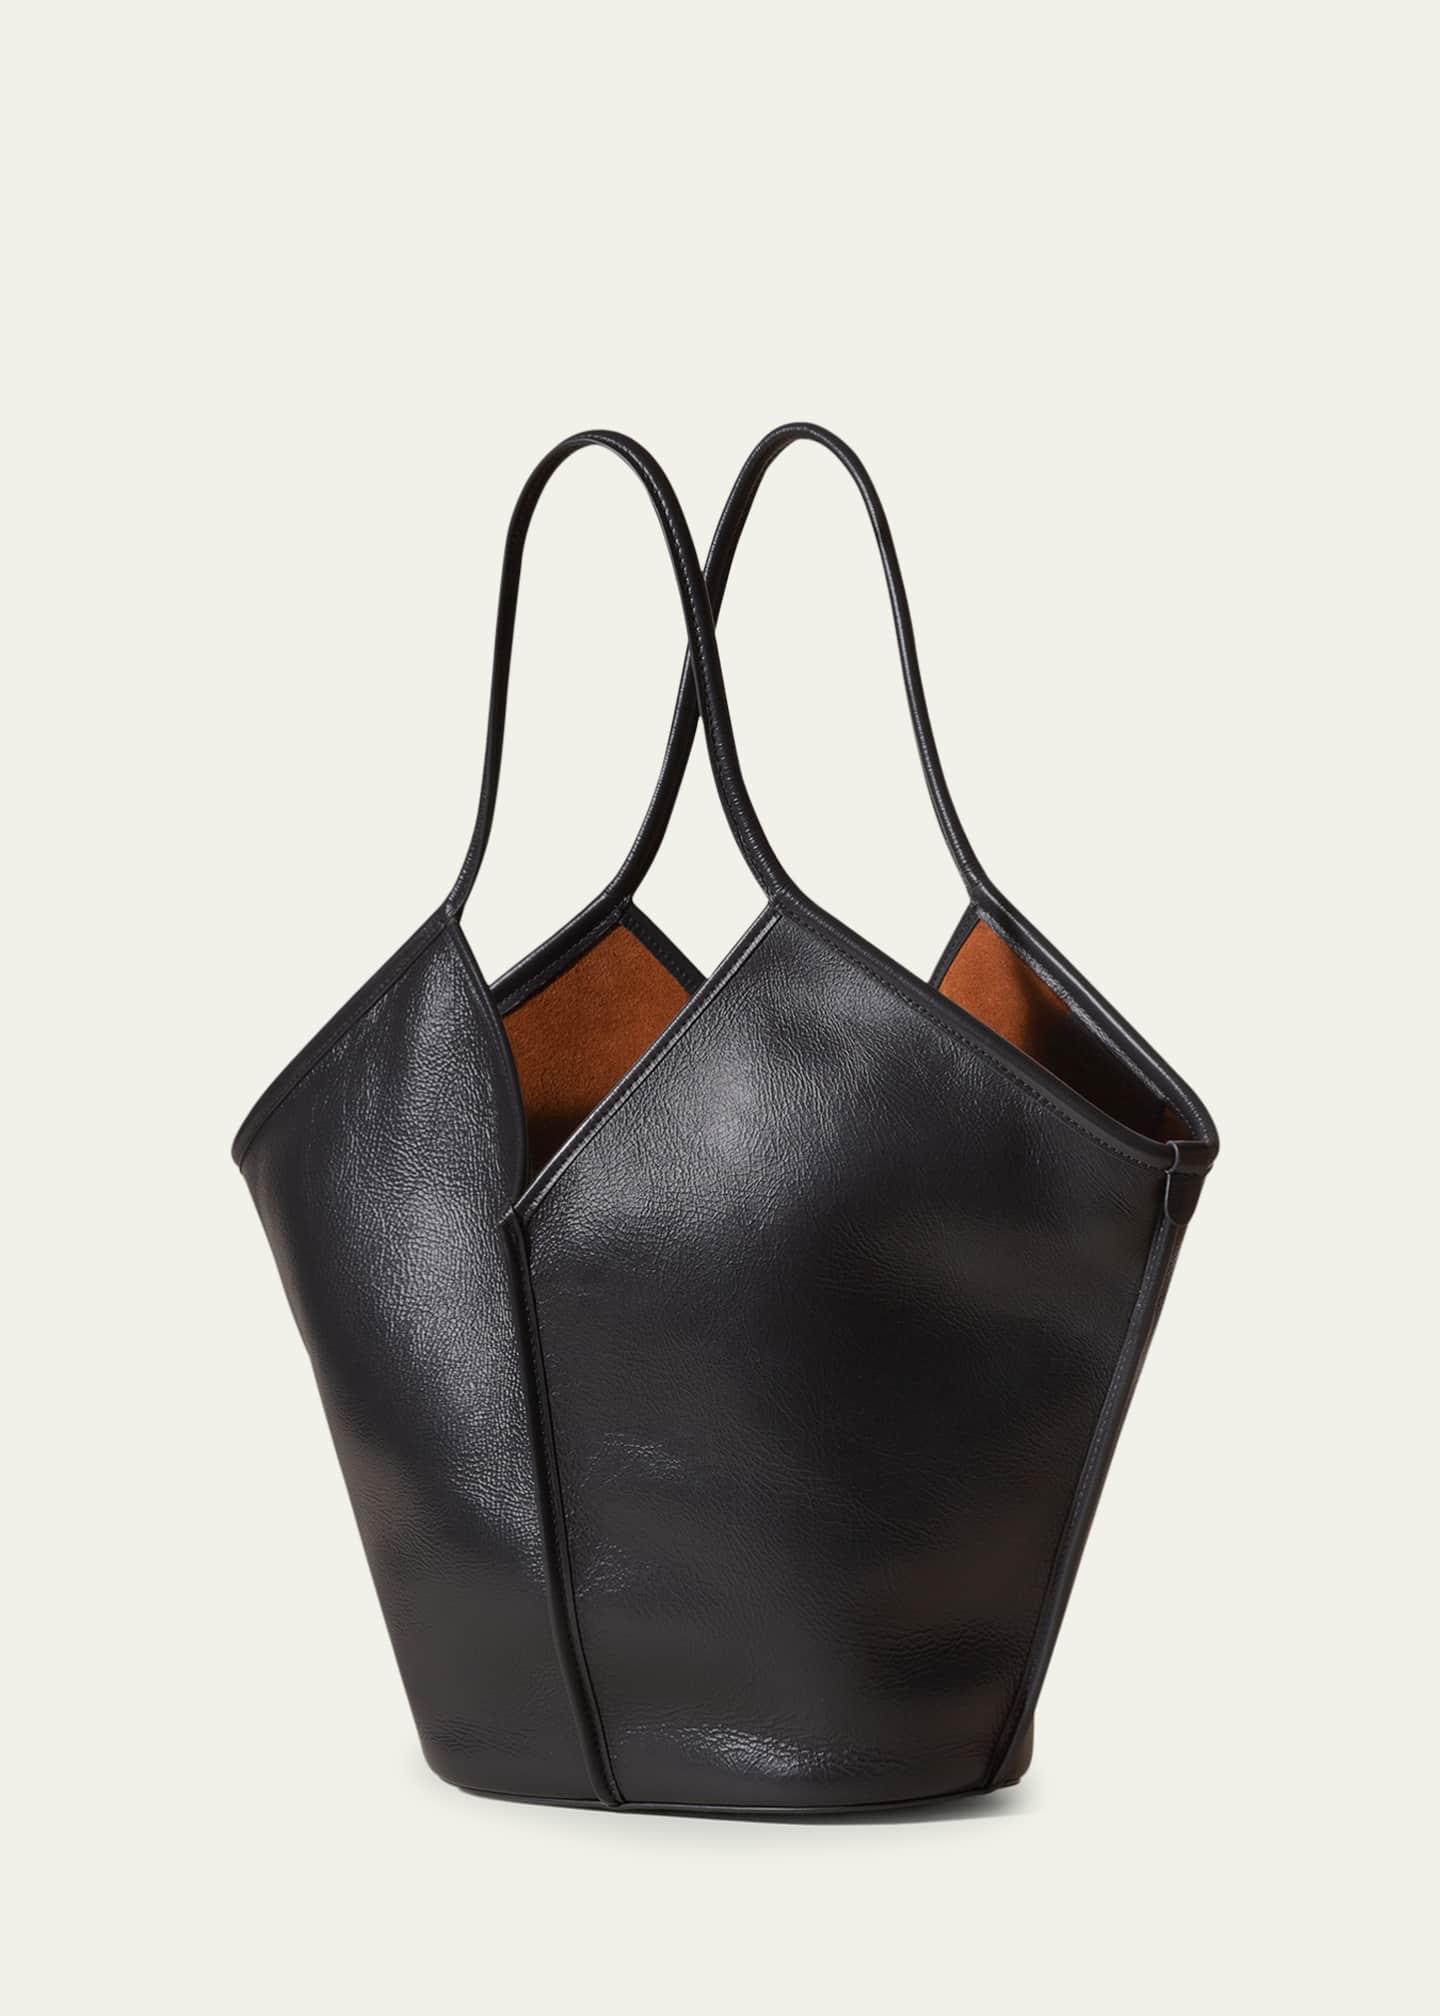 Black Calella leather tote bag, Hereu